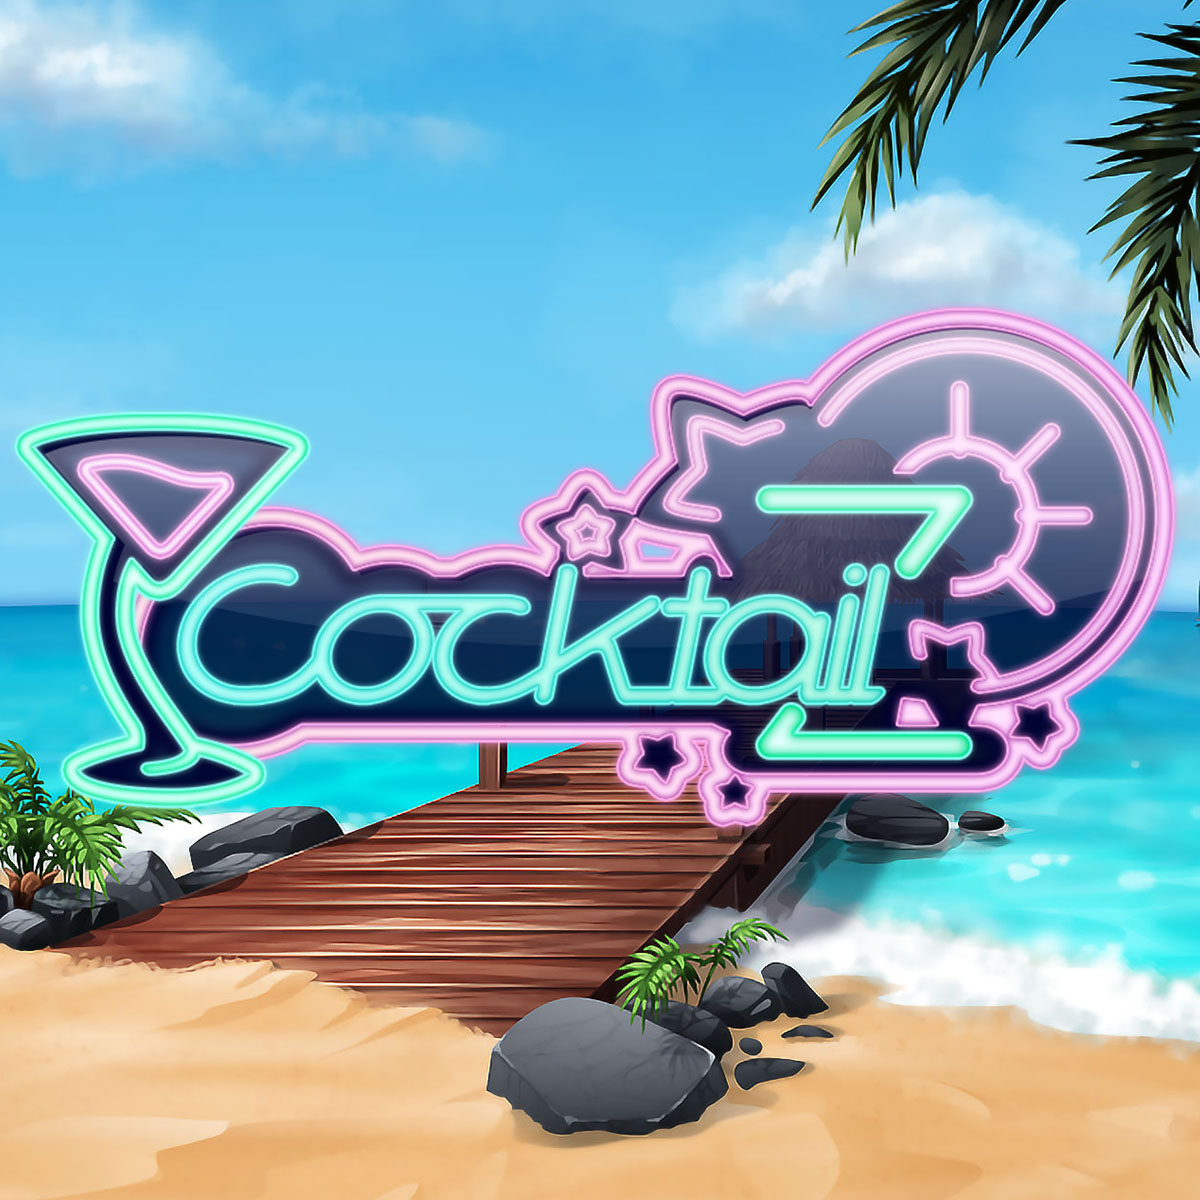 CocktailZ logo